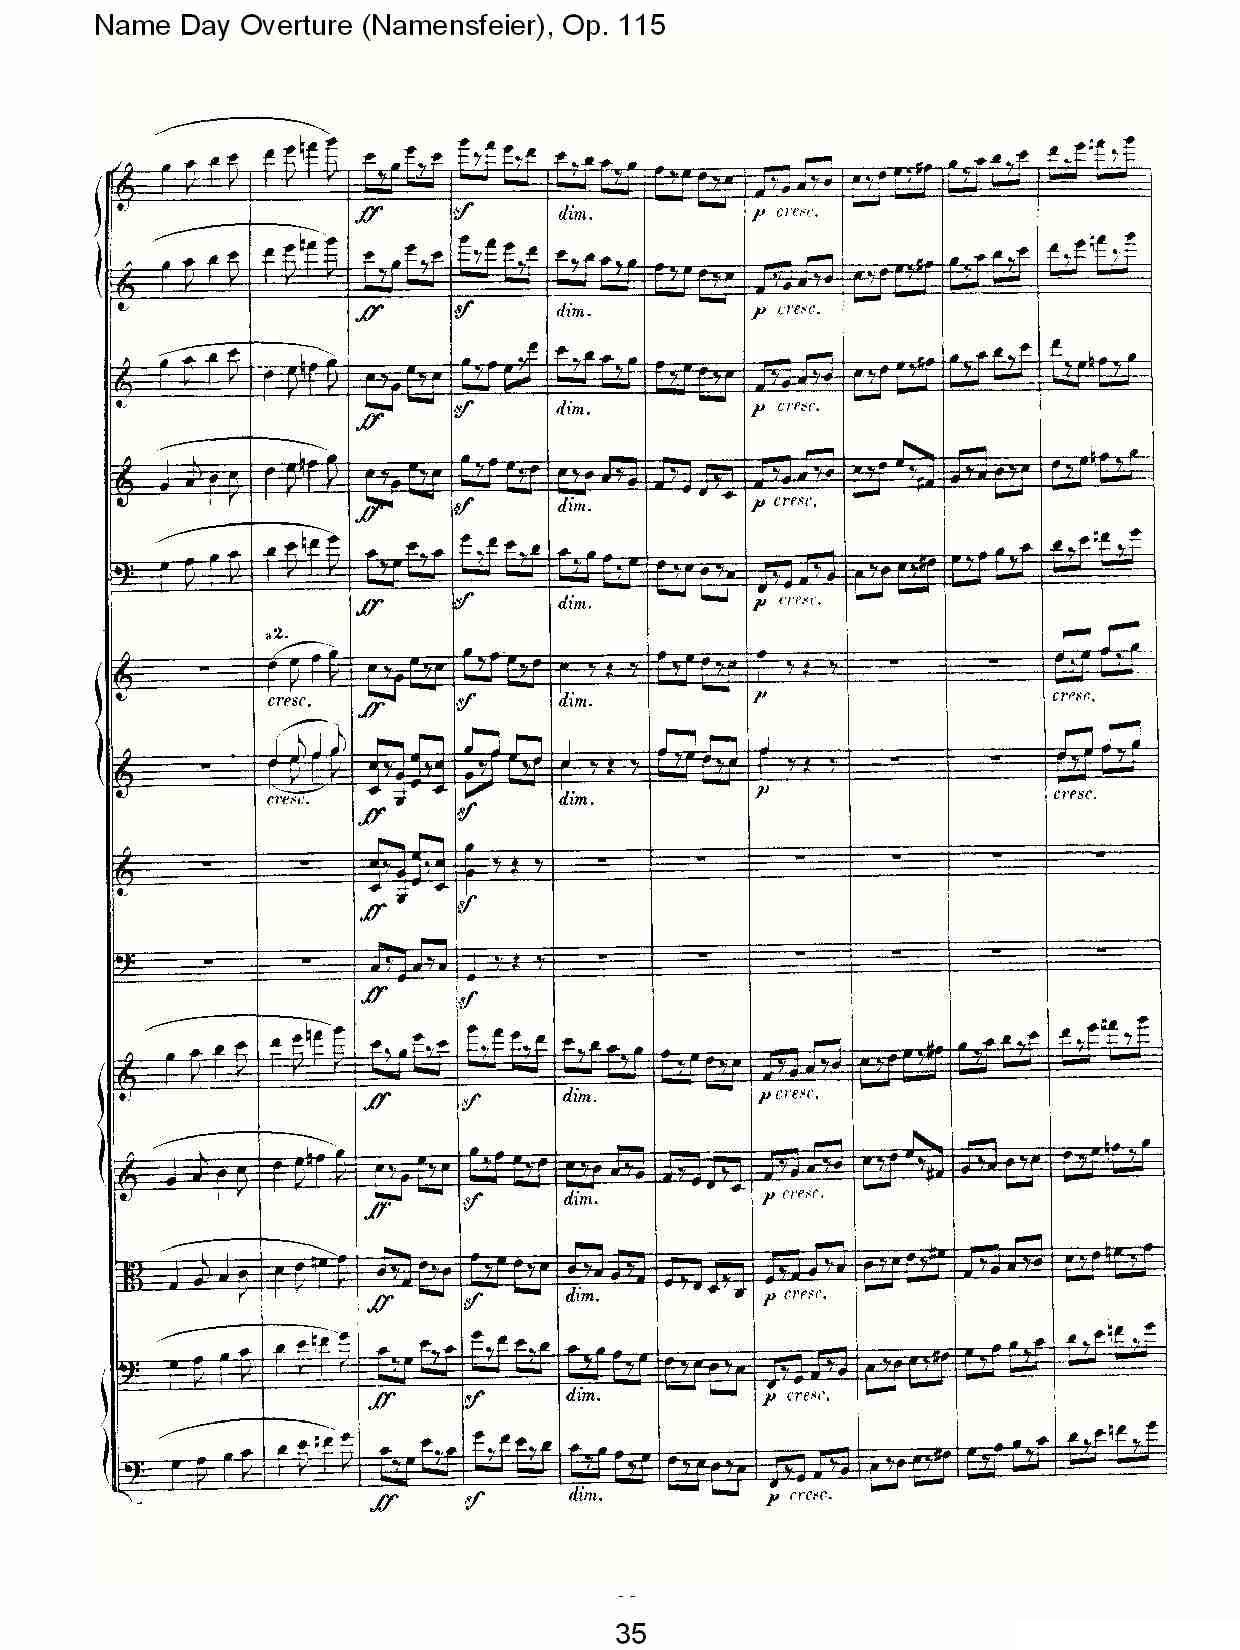 Name Day Overture（Namensfeier)，Op.11）其它曲谱（图35）